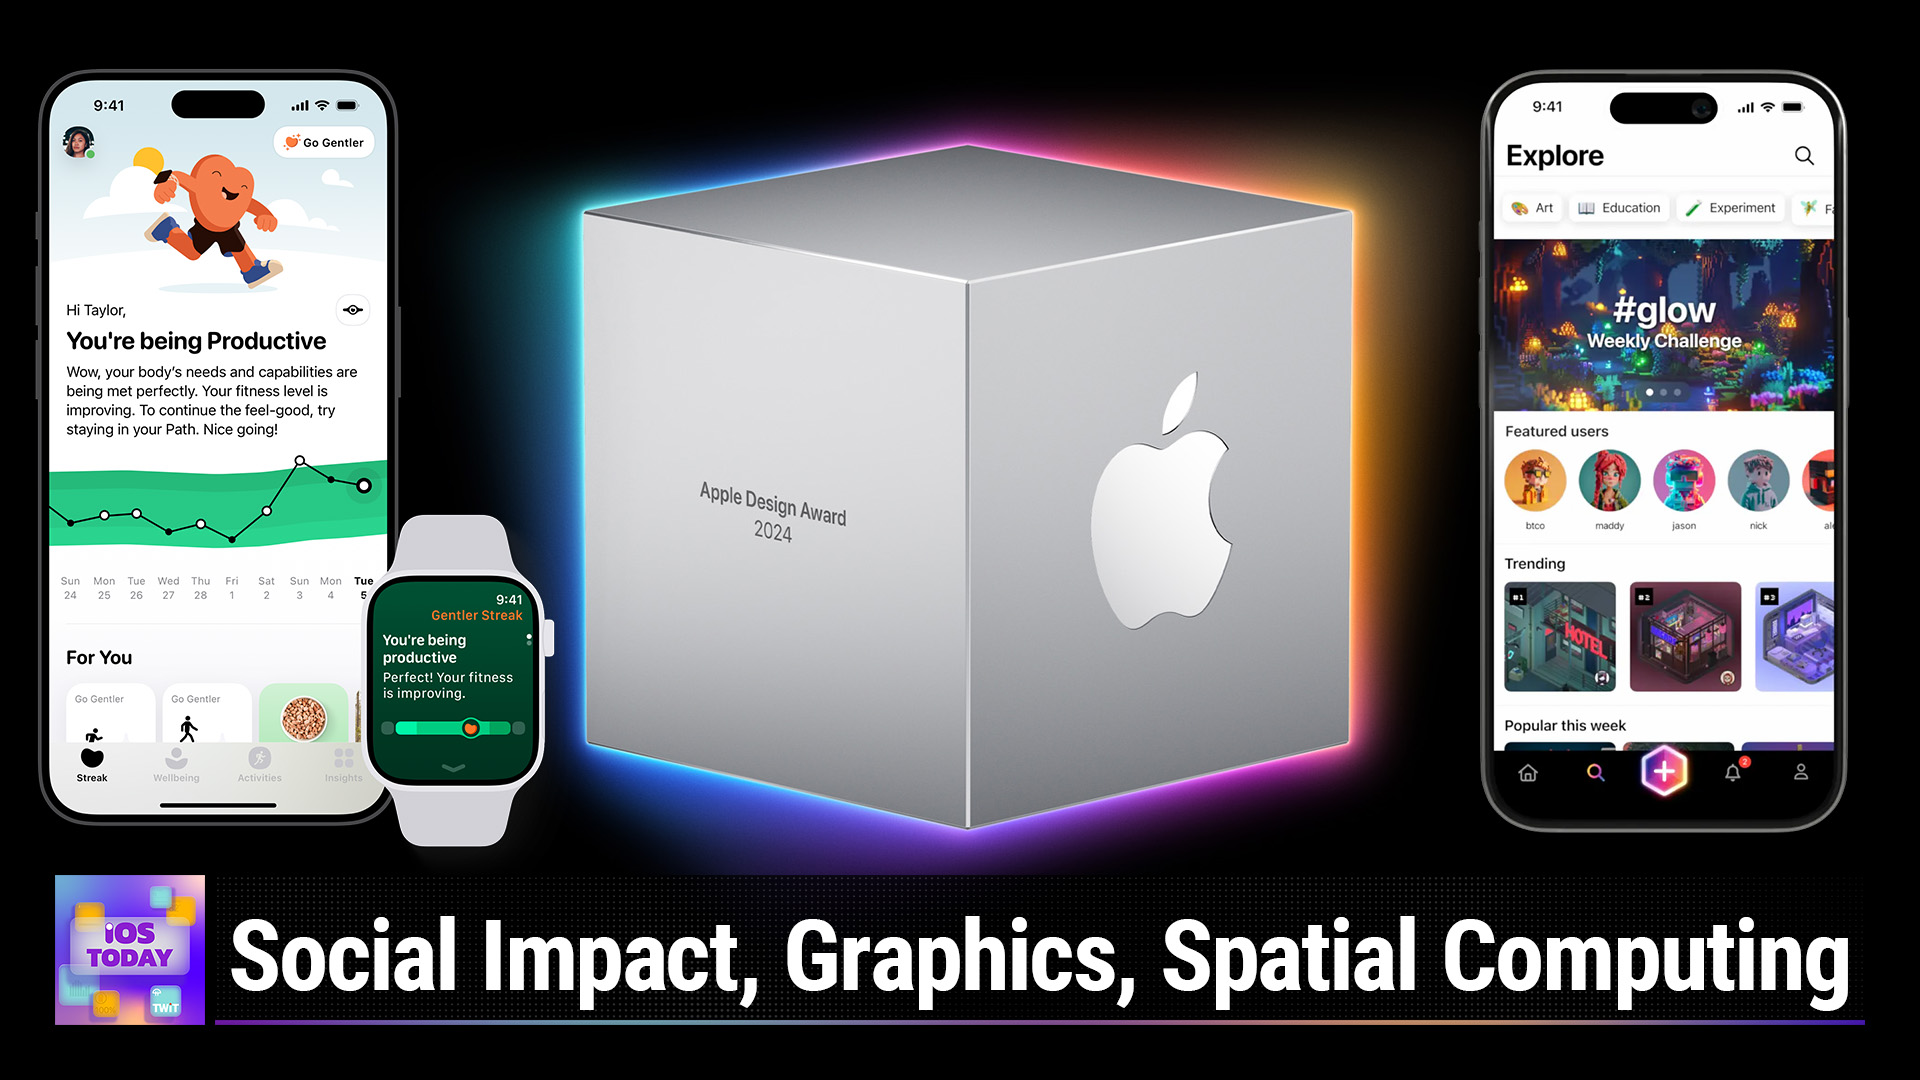 Apple Design Award 2024 Winners (Part 2) (iOS Today #710)